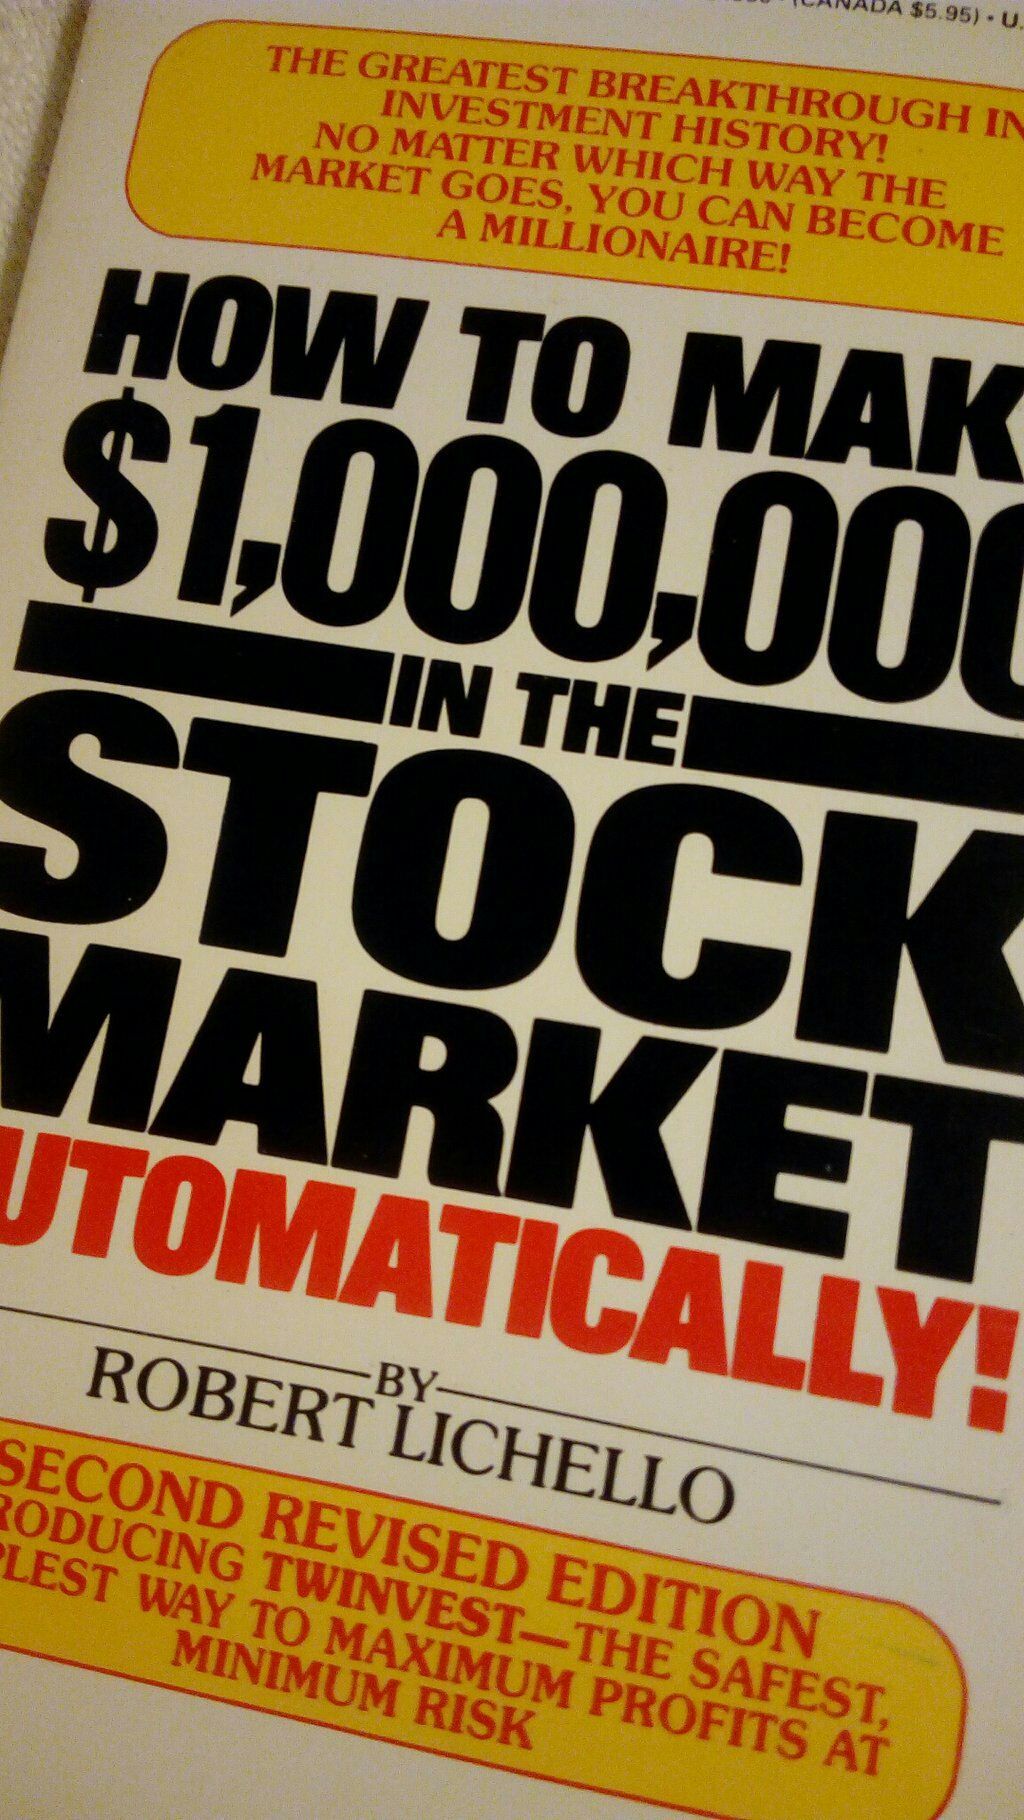 How to Make 1,000,000 in the Stock Market Automatically! de Robert Lichello